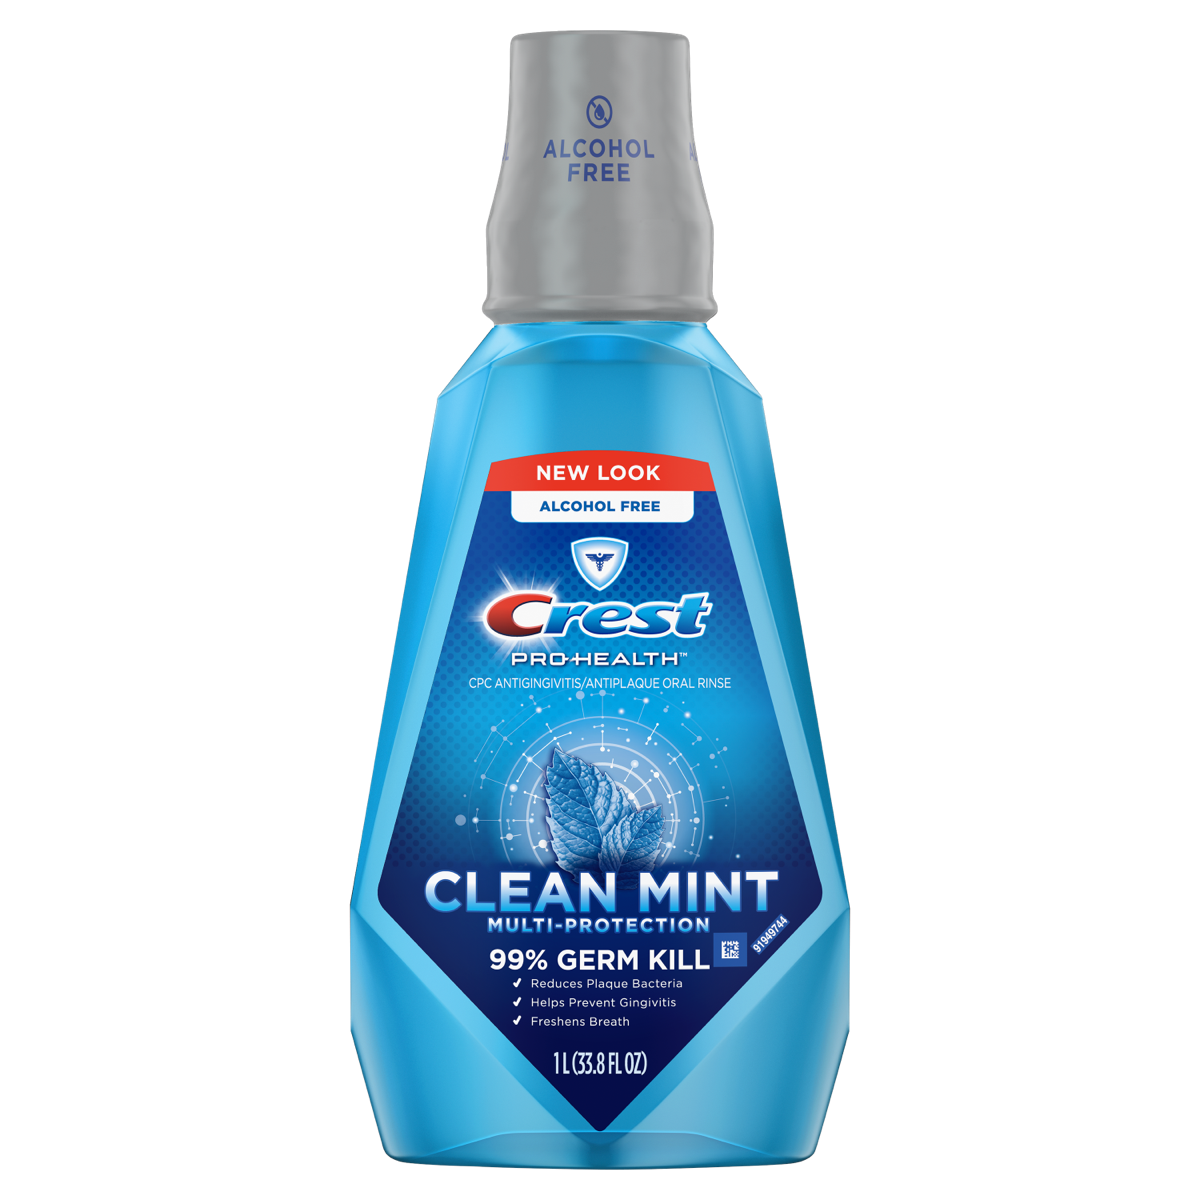 Crest Pro-Health Multi Protection Alcohol Free Mouthwash, Clean Mint 